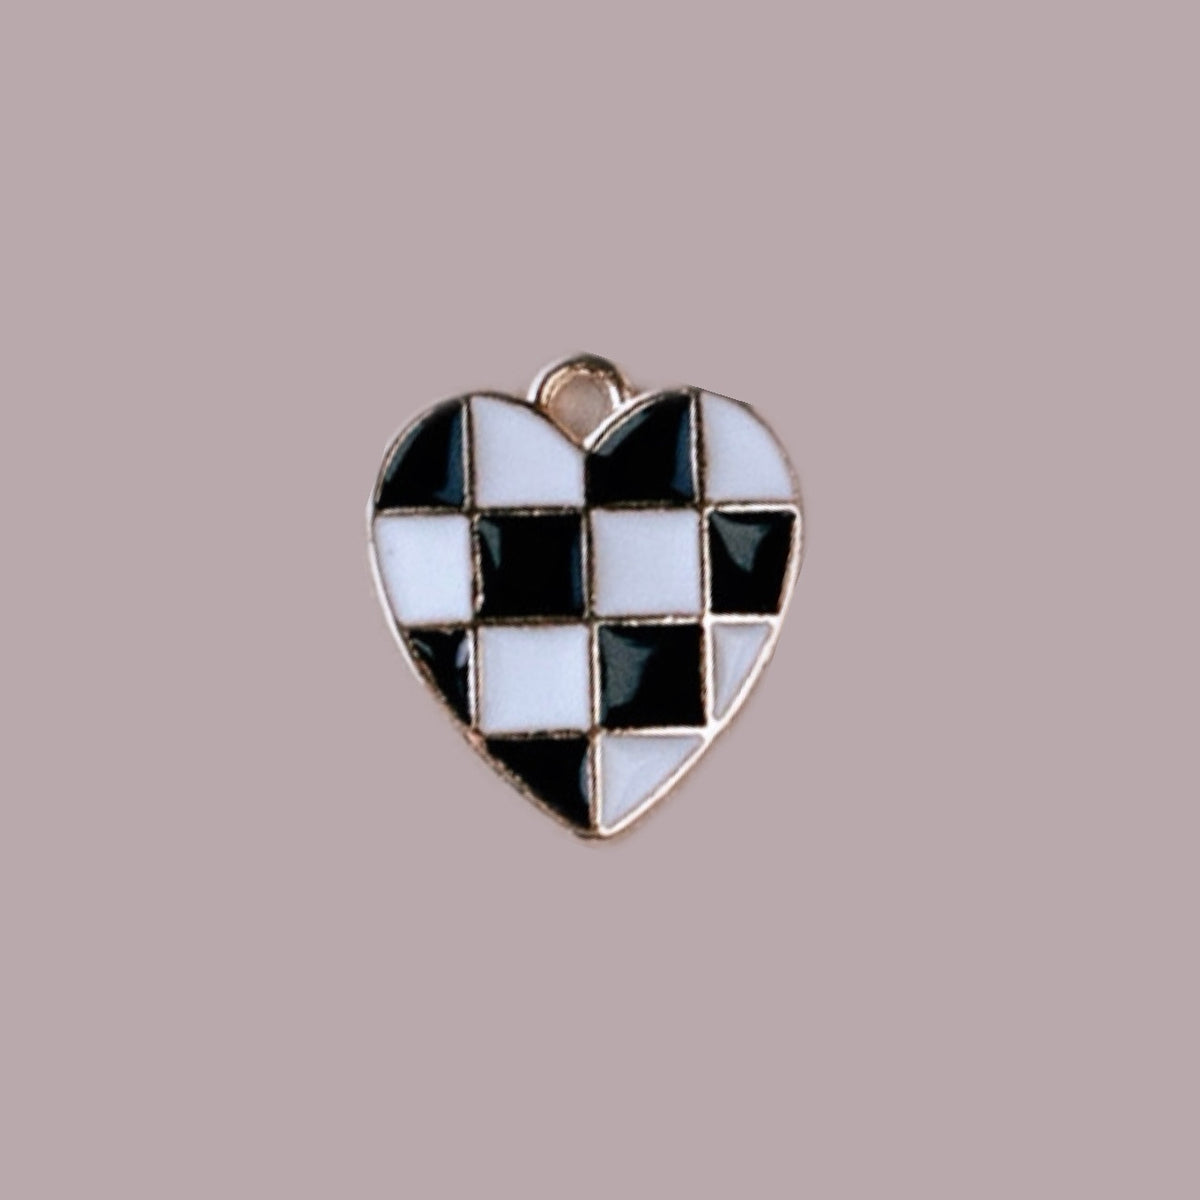 Checkered Black Enamel Heart Charm